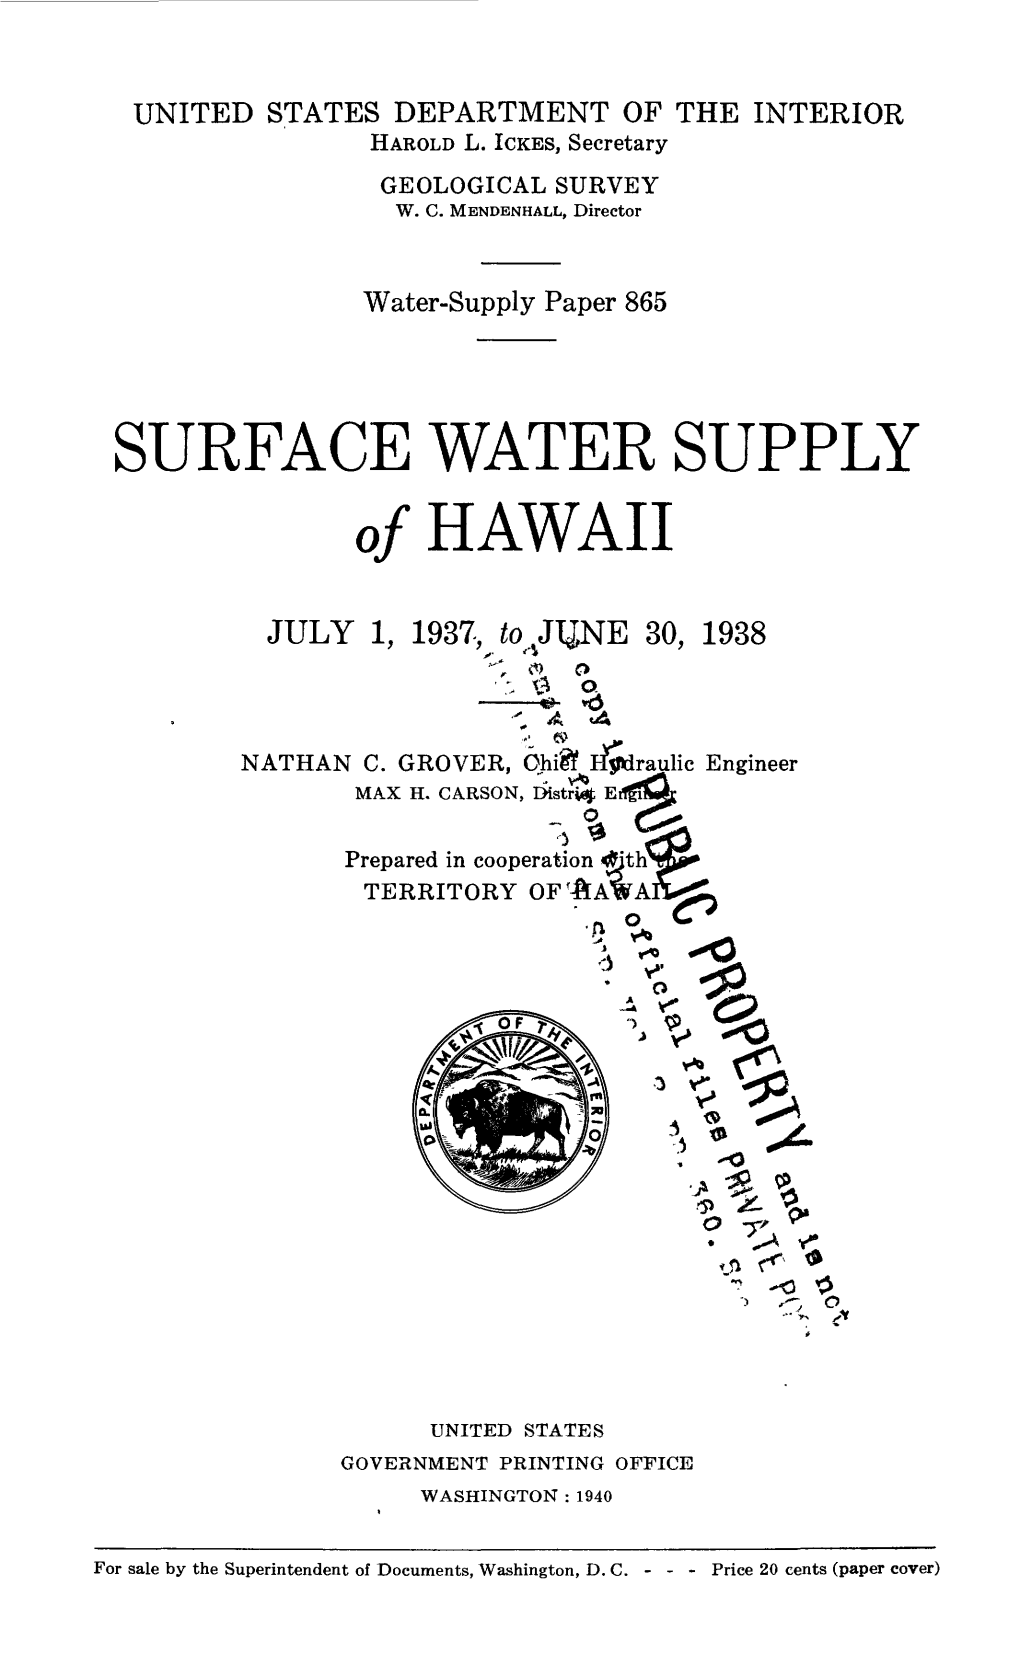 SURFACE WATER SUPPLY of HAWAII